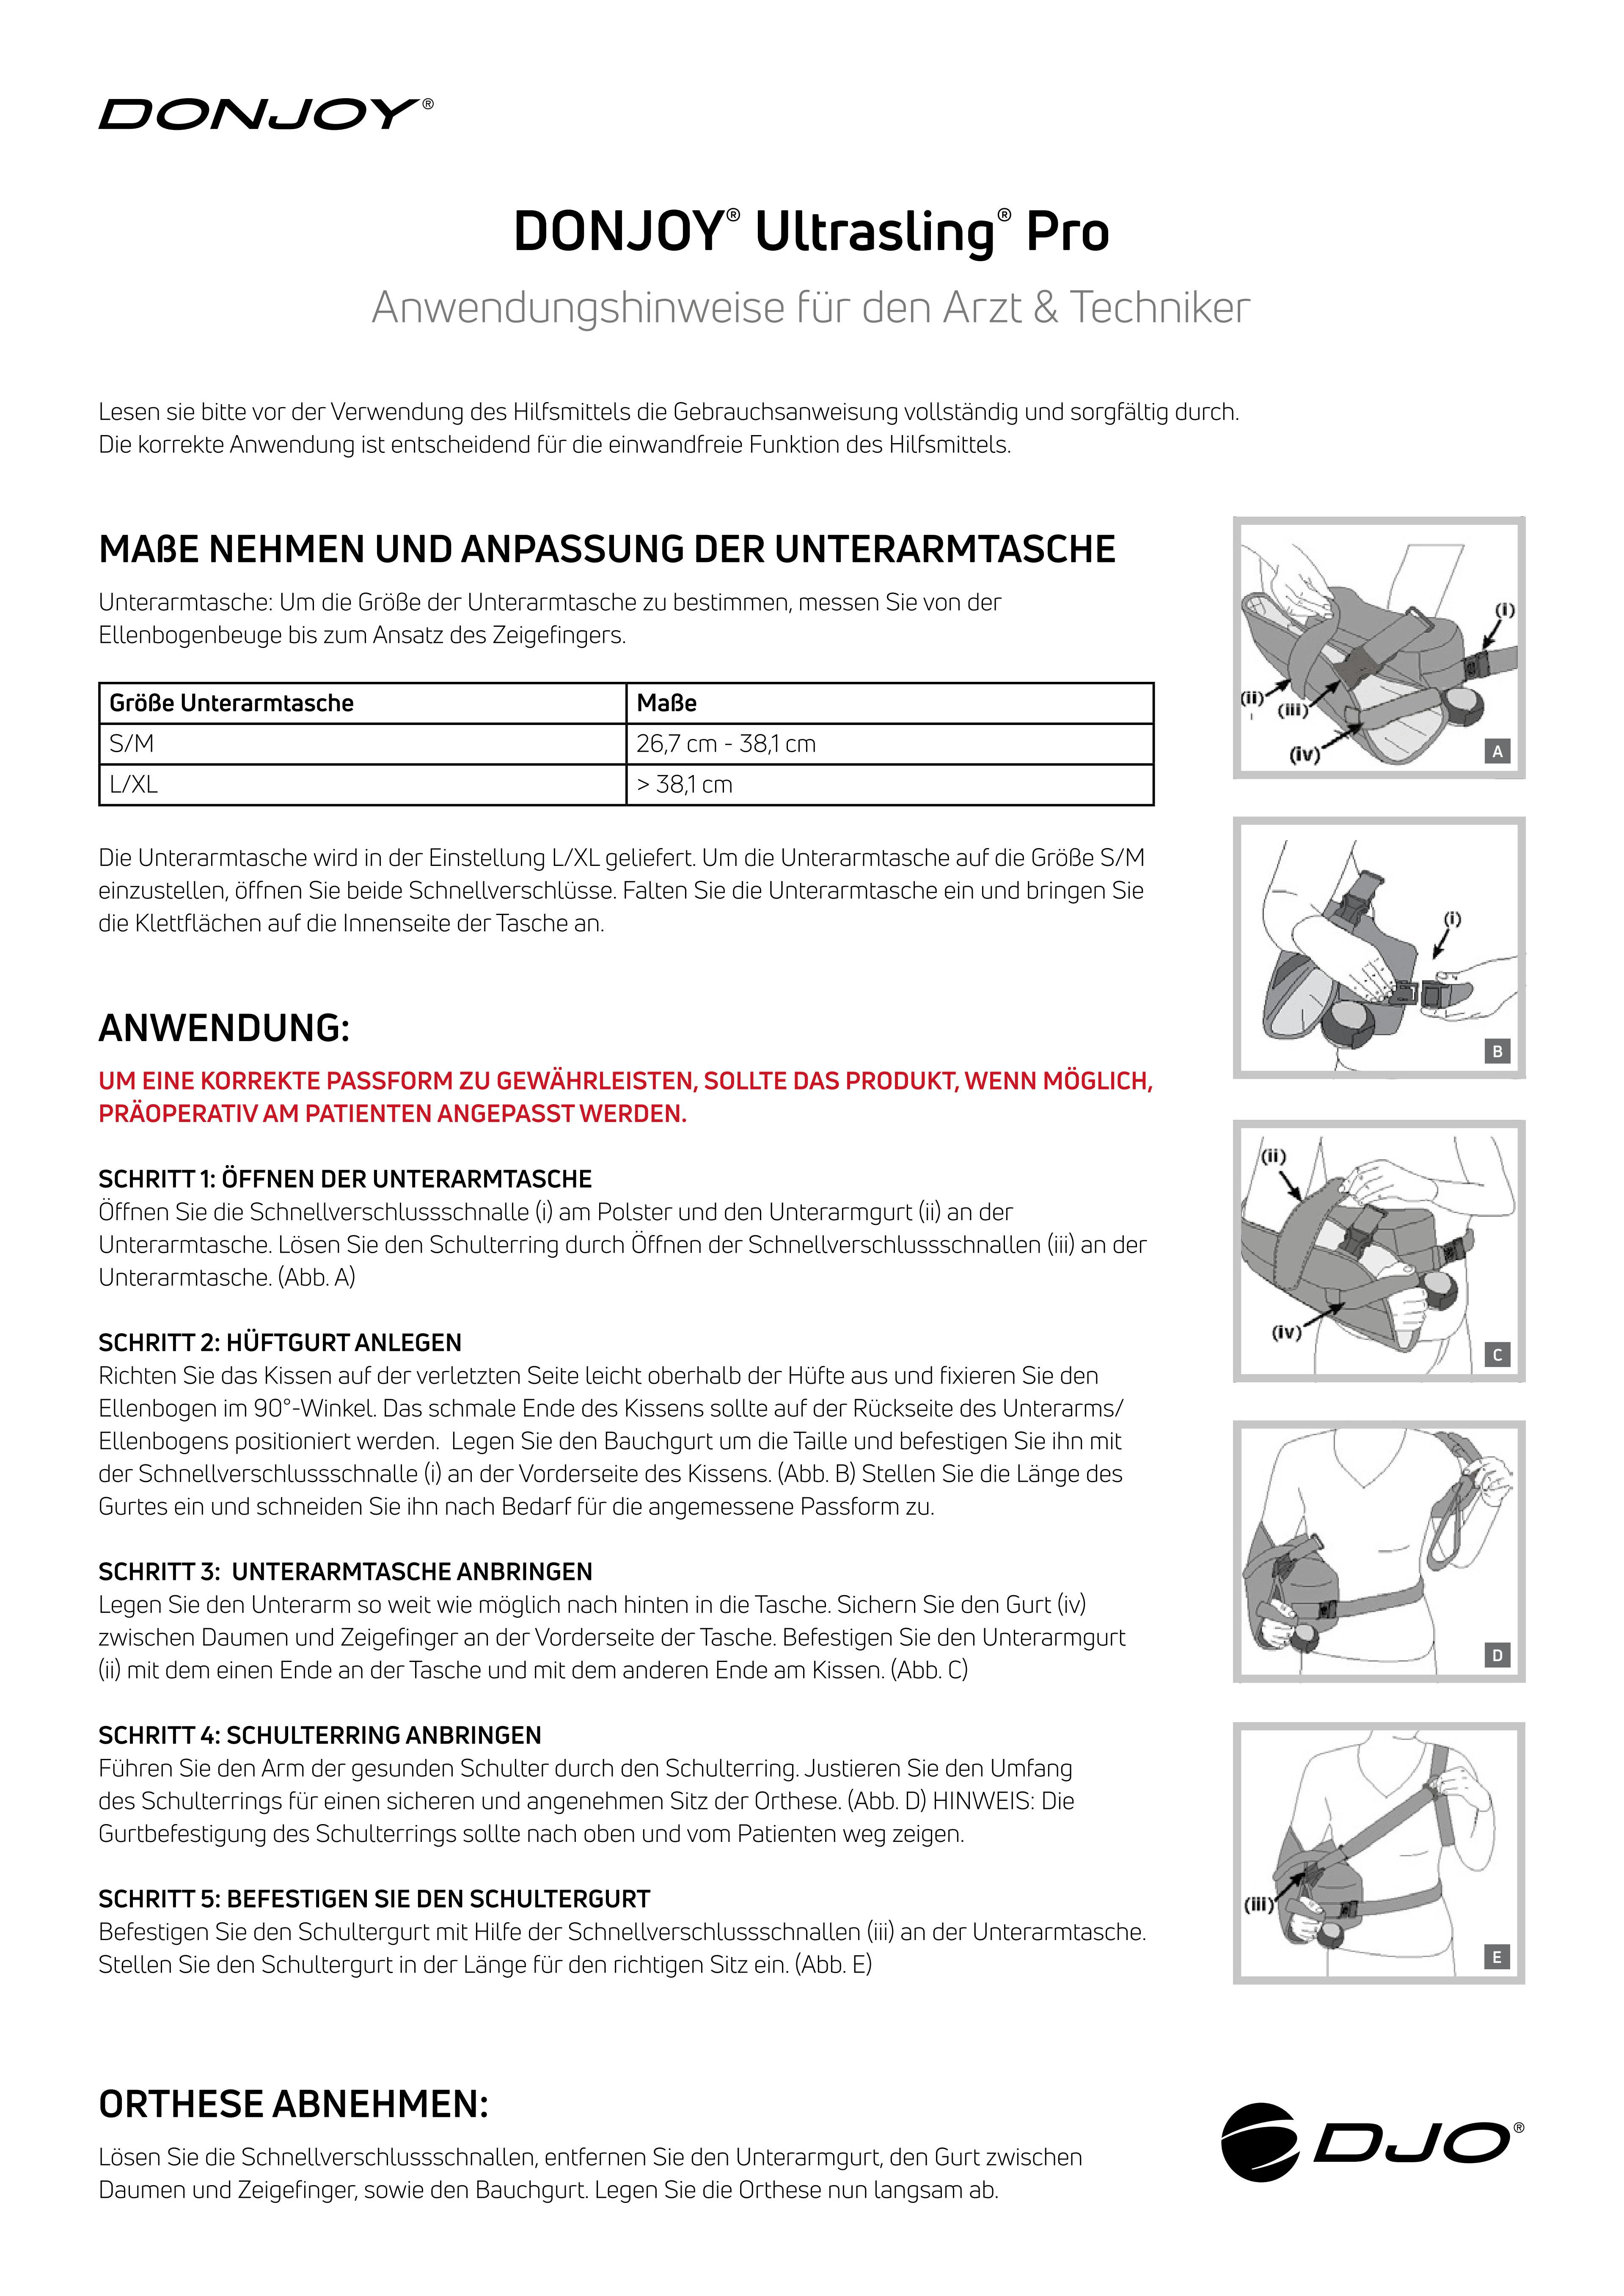 MKT-OT-0264 Anwendungshinweise Donjoy Ultrasling Pro.pdf